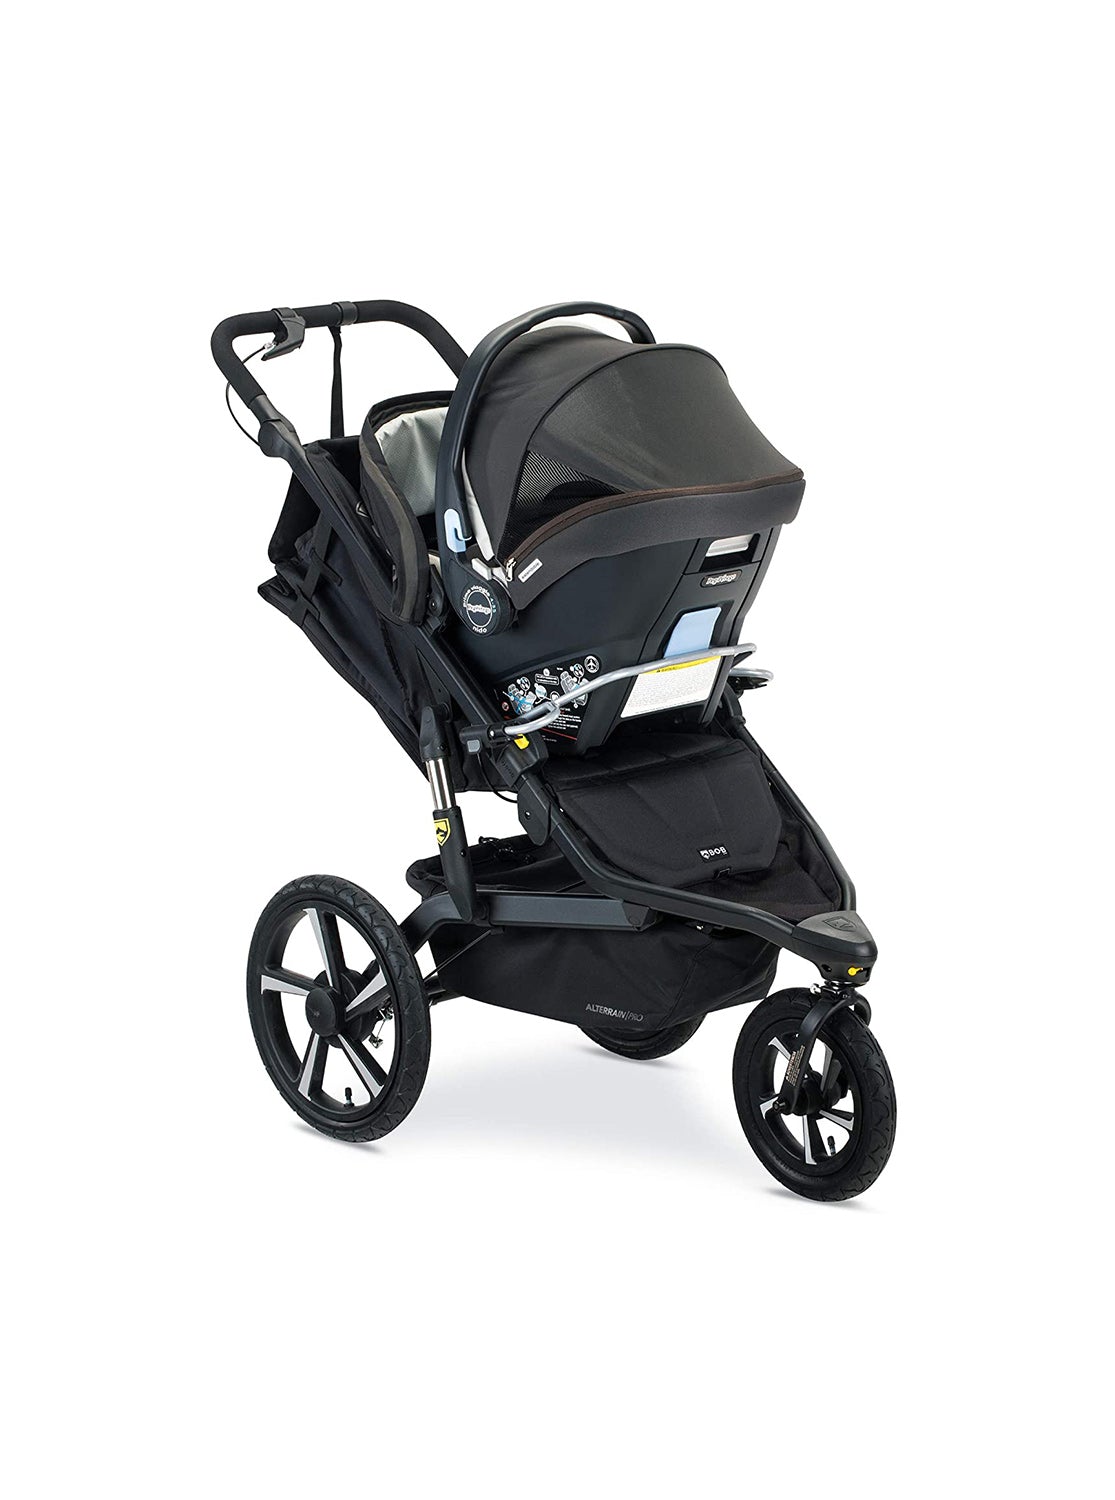 BOB Gear Single Jogging Stroller Adapter for Peg Perego Infant Car Seats, -- ANB Baby